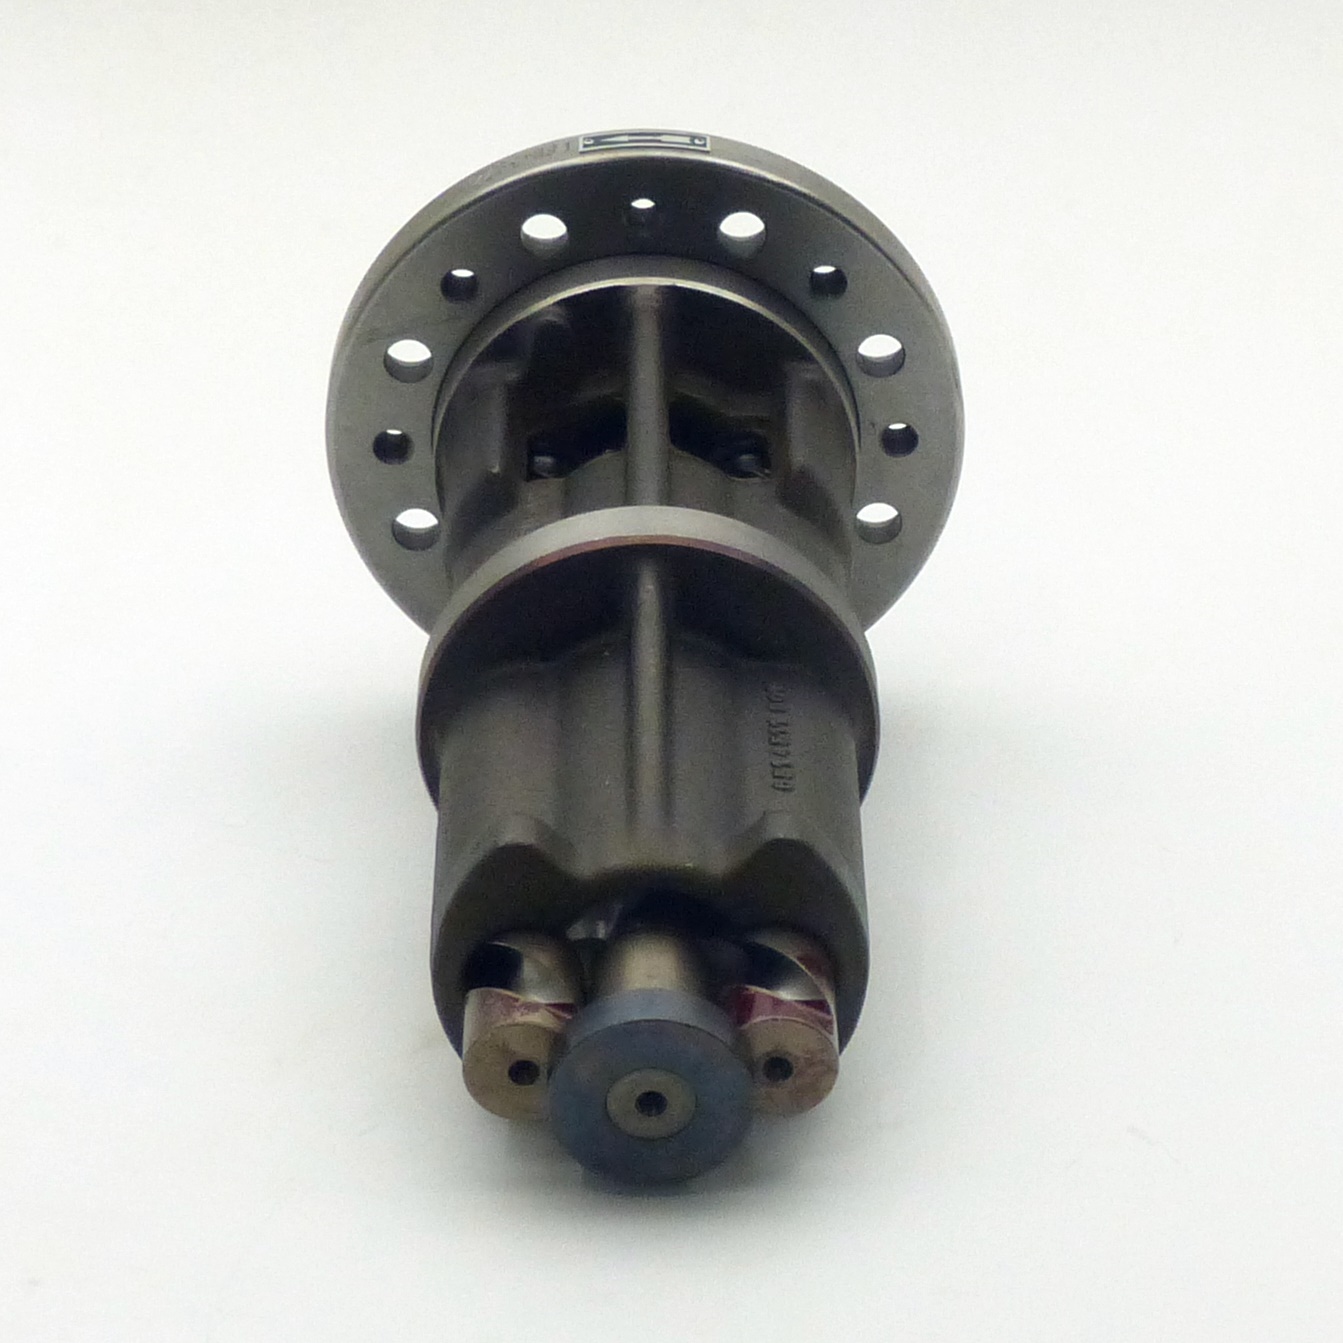 Screw Spindle Pump T8045972 